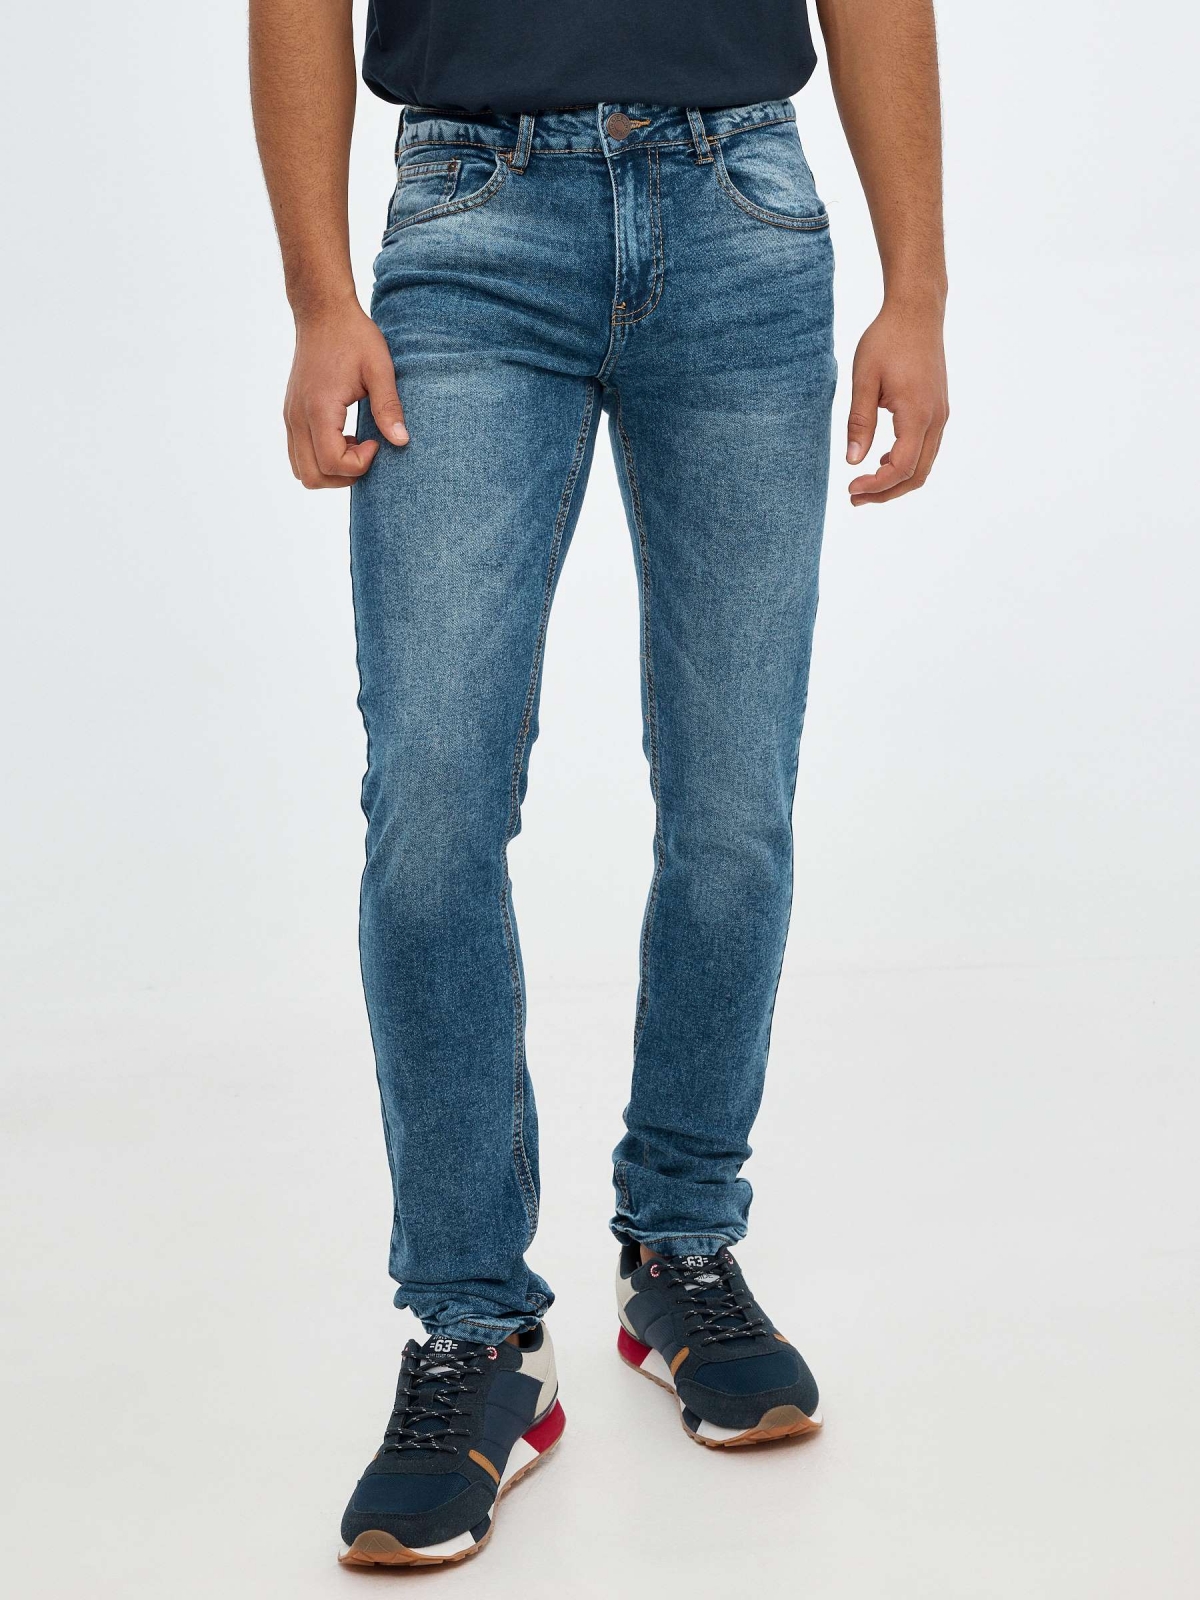 Jeans slim denim blue middle front view